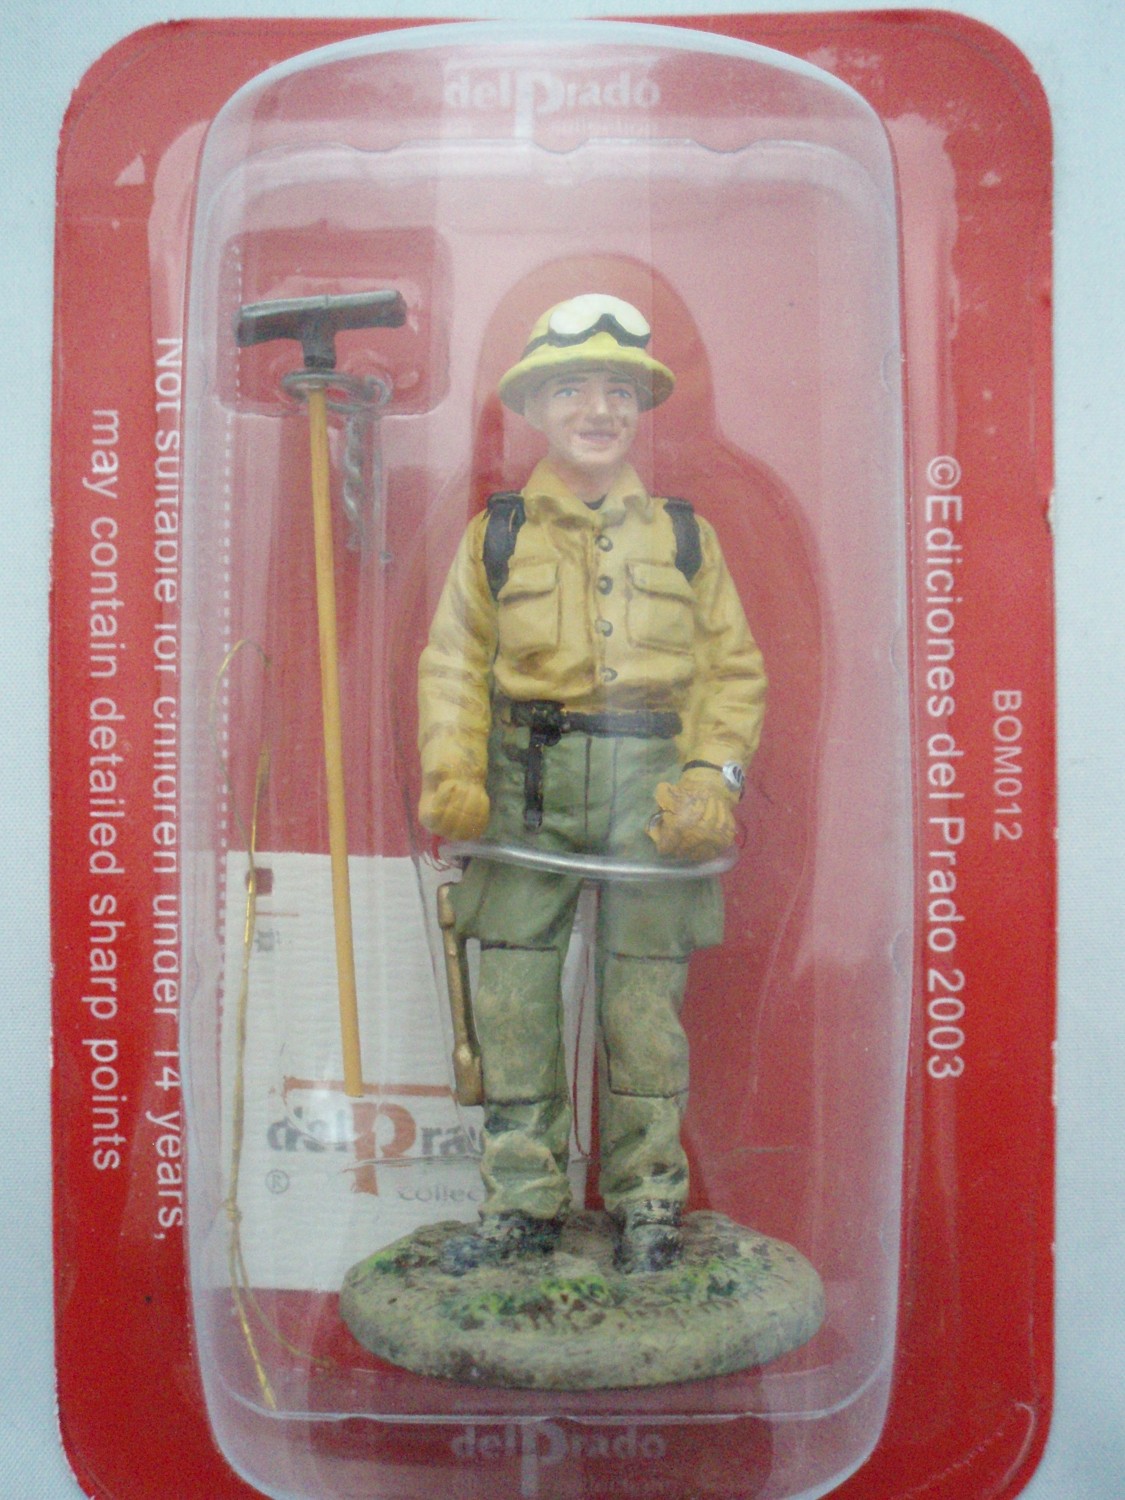 Firefighter Figurine Fireman Thailand 1975 Metal Del Prado 1/32 2.75" 